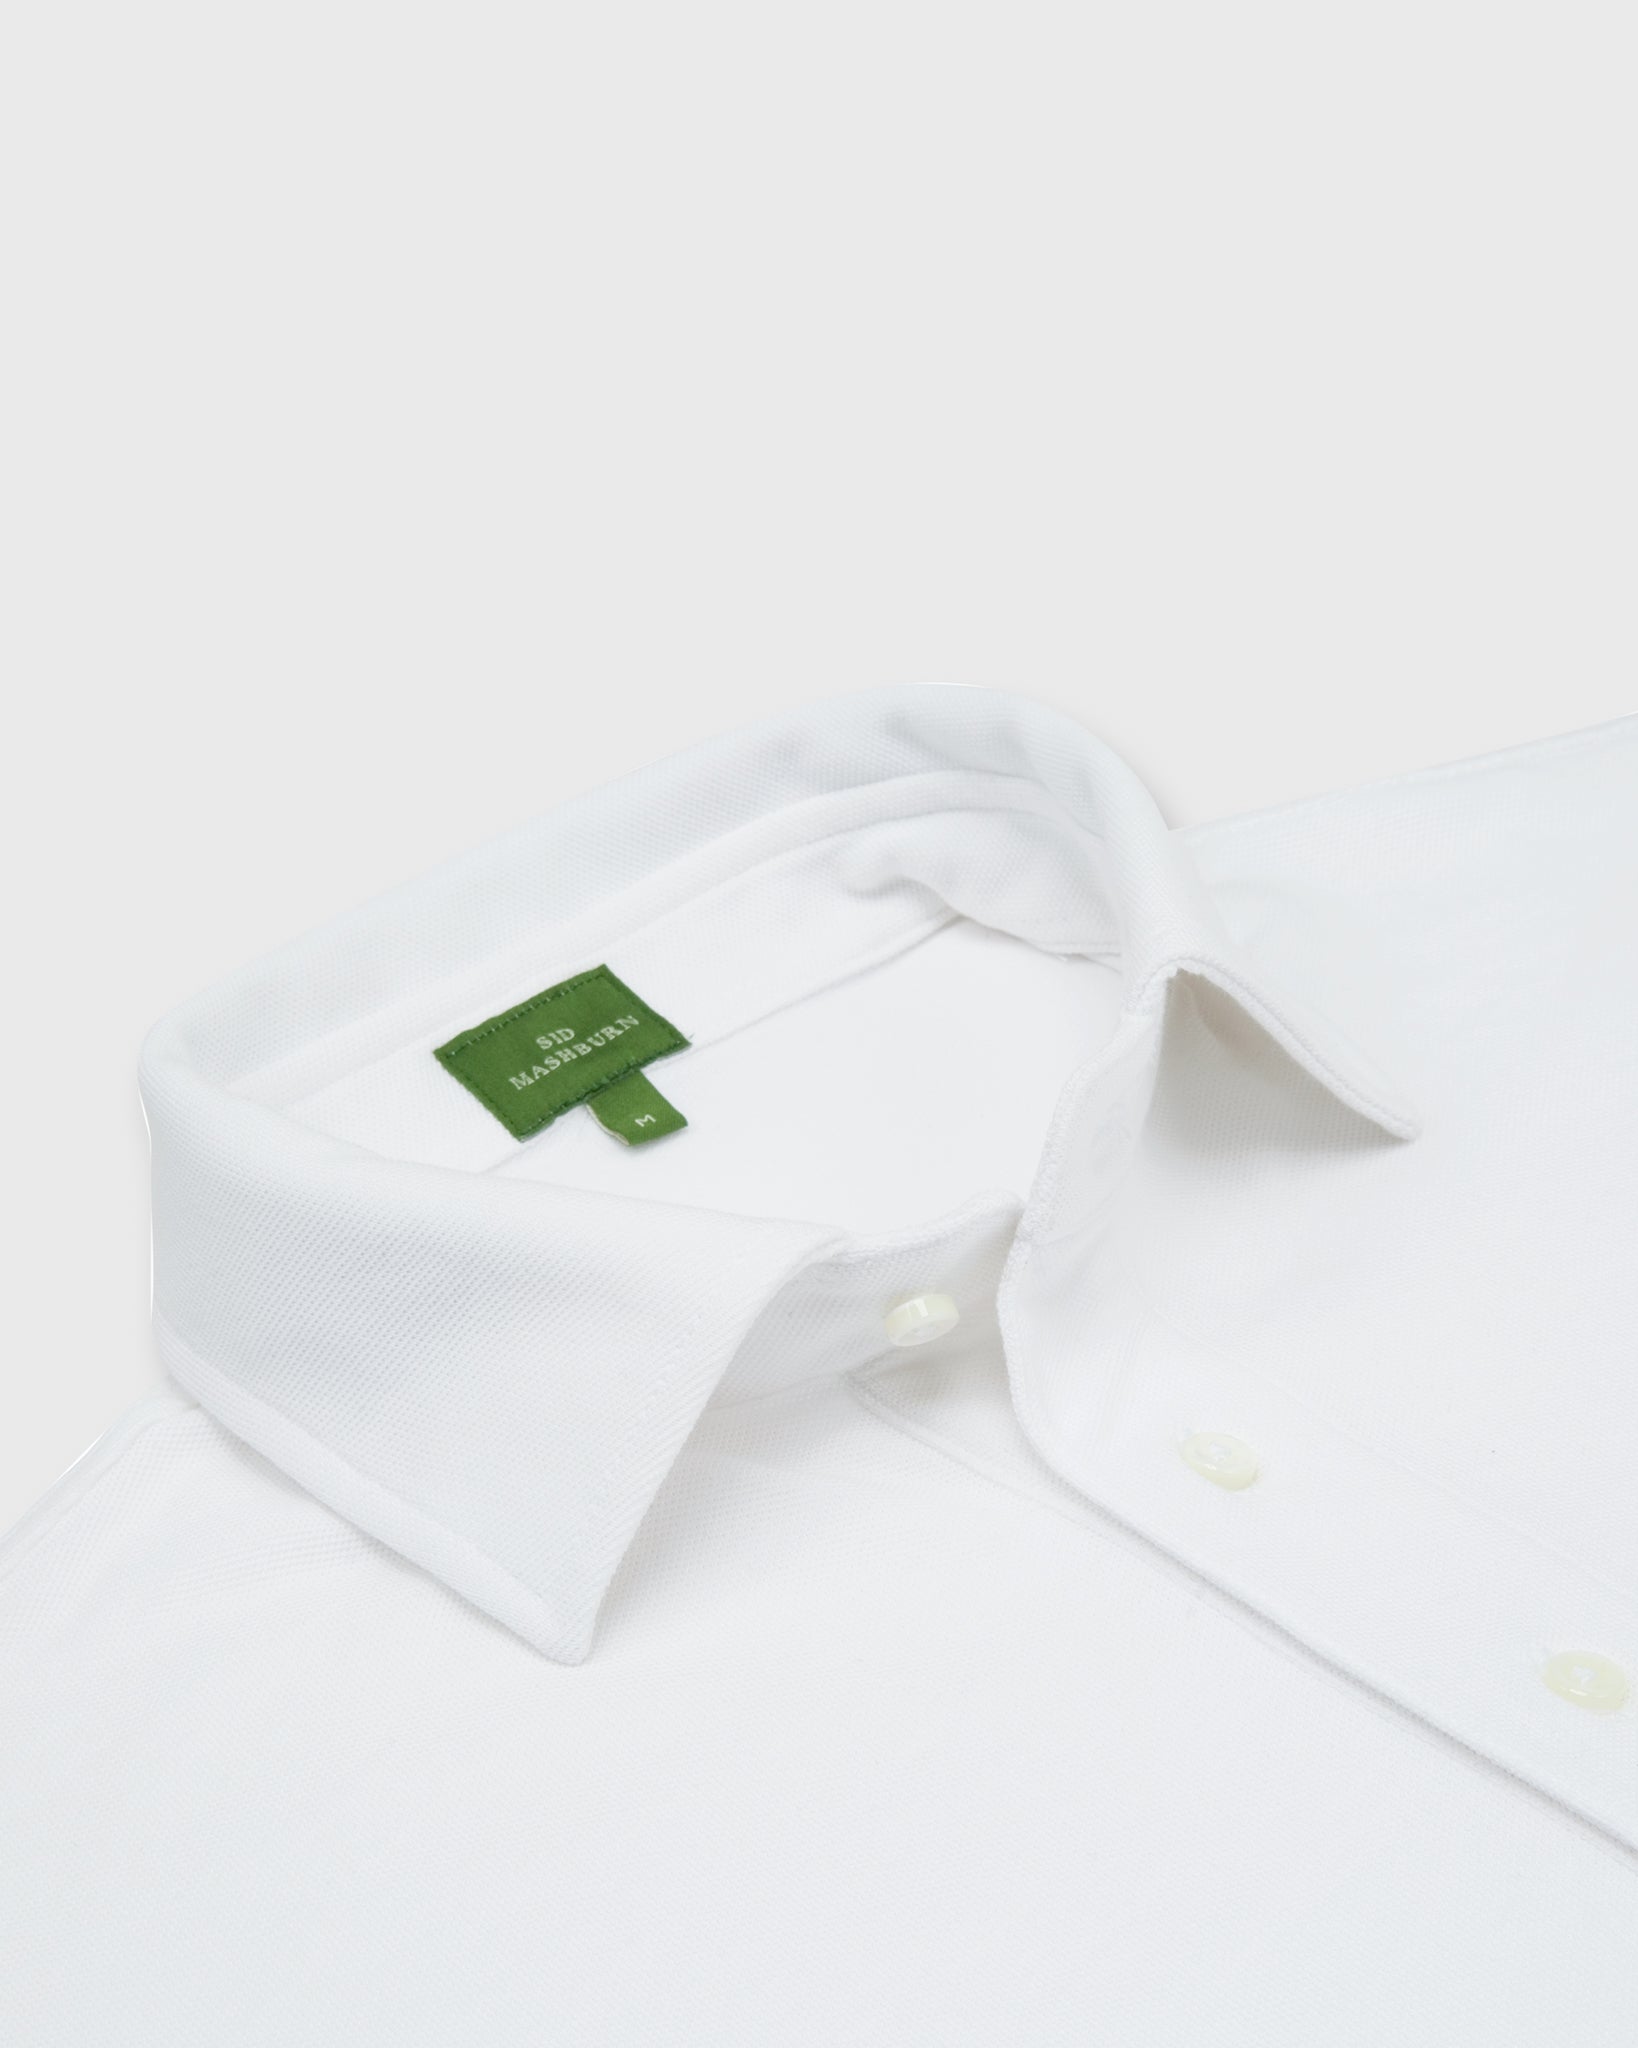 Short-Sleeved Polo White Pima Pique